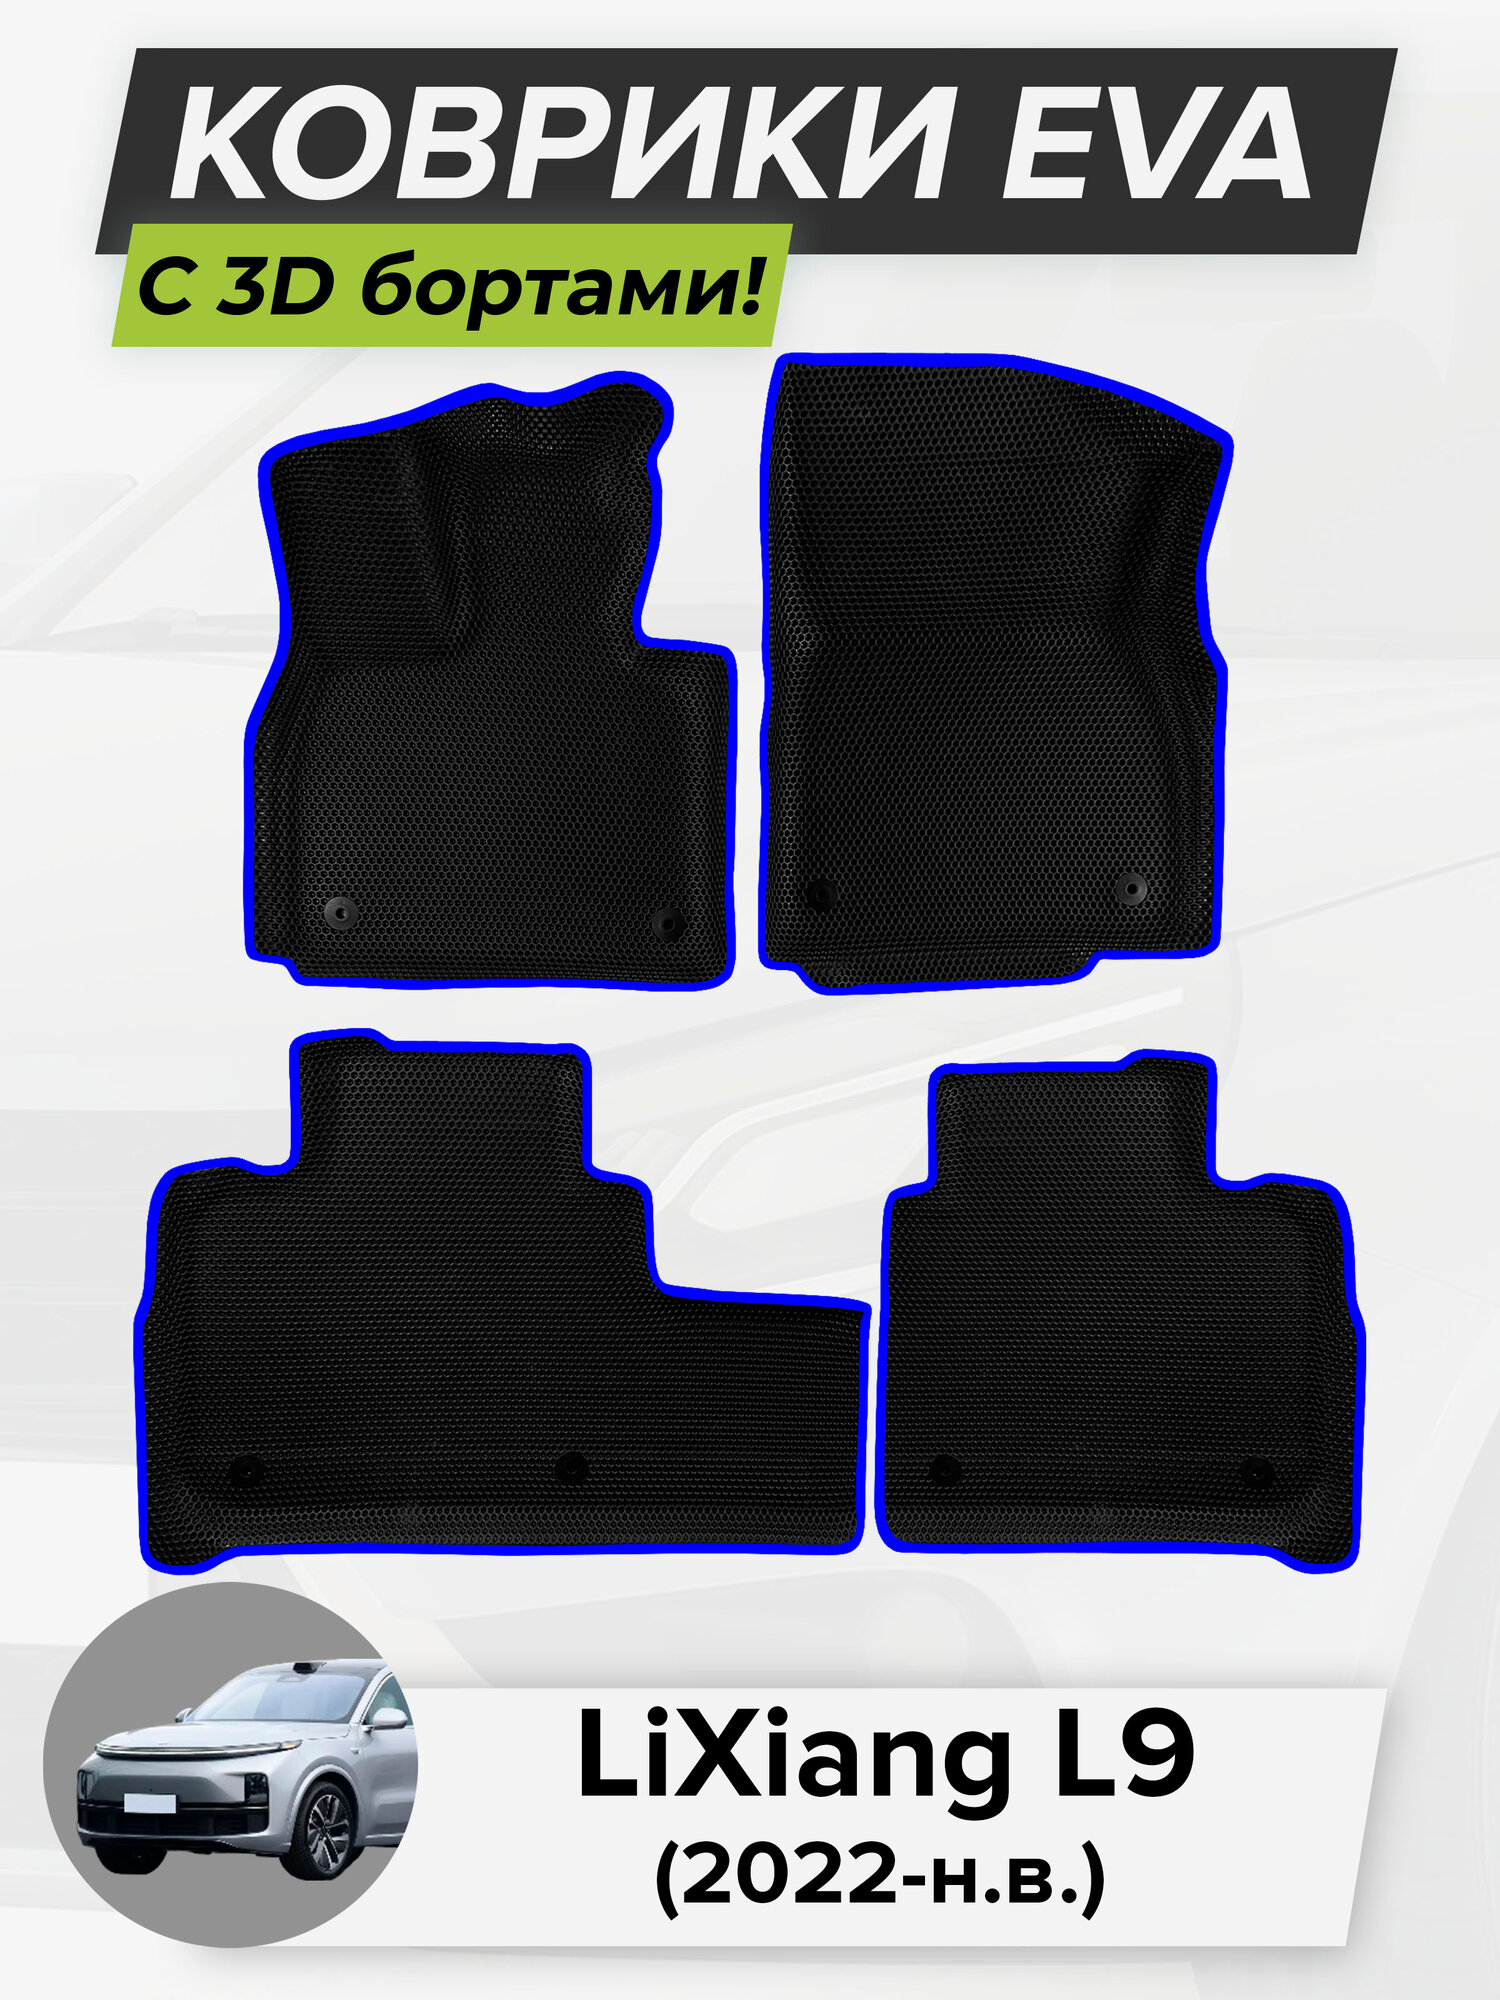 3D EVA коврики с бортиками в салон для автомобиля LiXiang L9, Лисян Л9, 2022-н. в. ЭВА ЕВА Соты